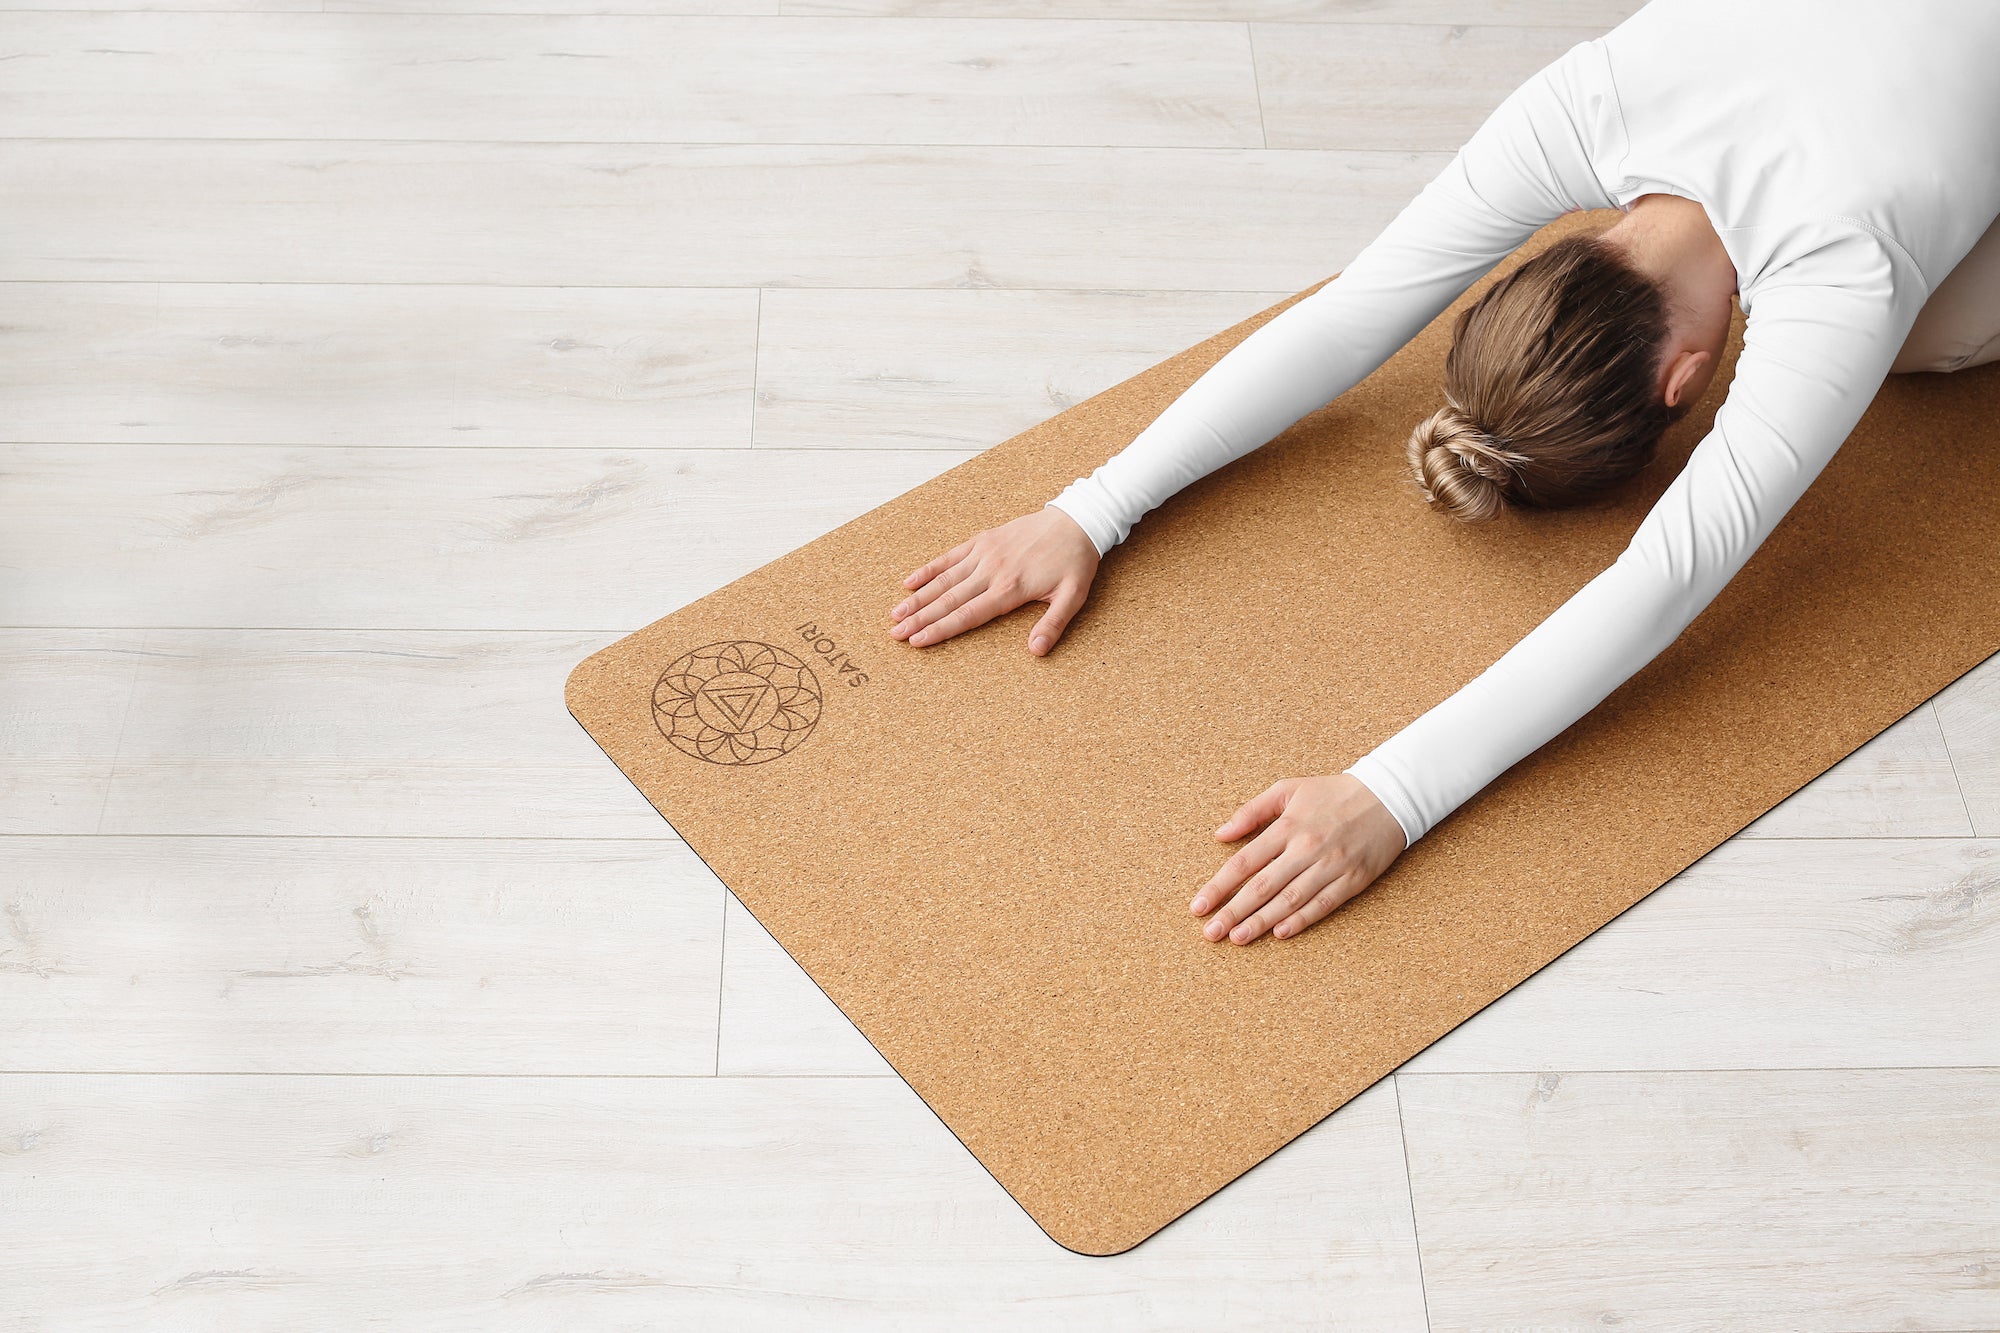 Yogi Squat - Yoga Pose With So Many Benefits